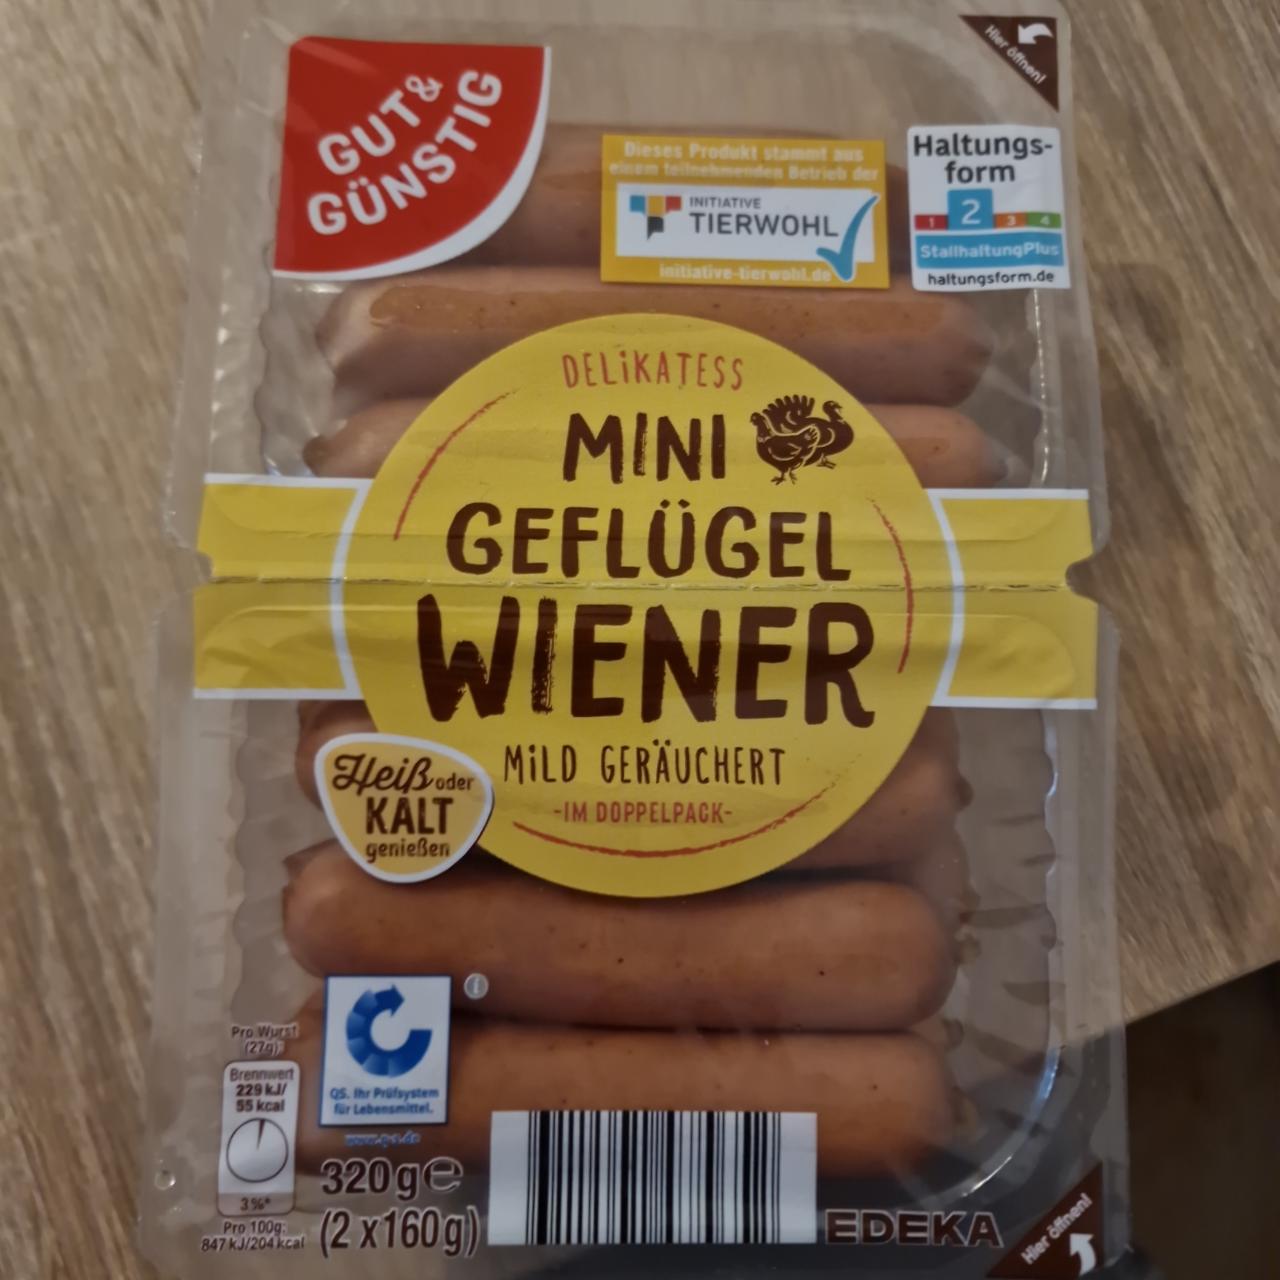 Delikatess Mini geflügel wiener Gut&Günstig kJ nutričné hodnoty kalórie, a 